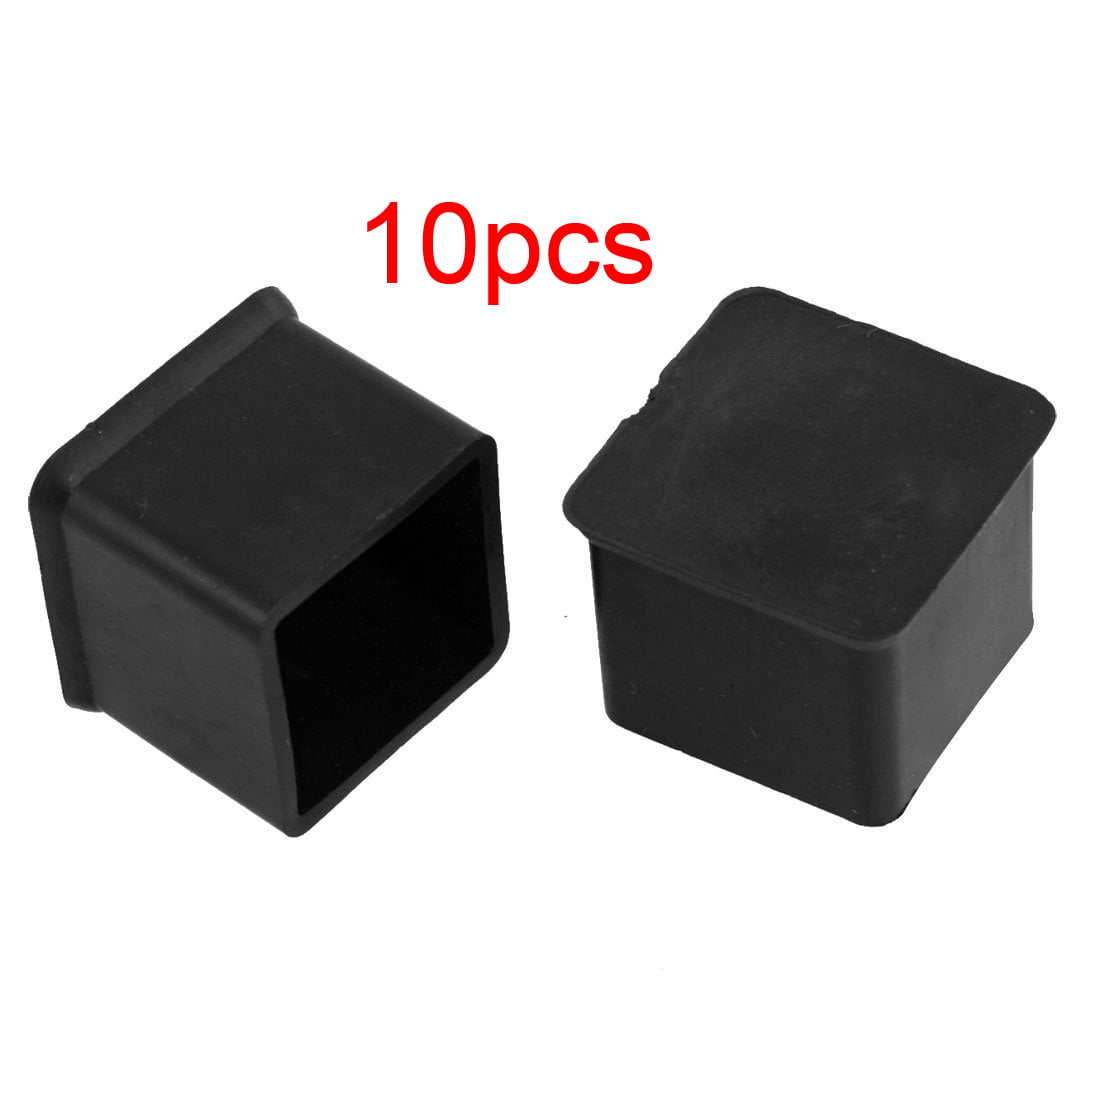 Newest 10 Pcs Black 1" x 1" Furniture Square Rubber Foot Covers Protectors D2B1 